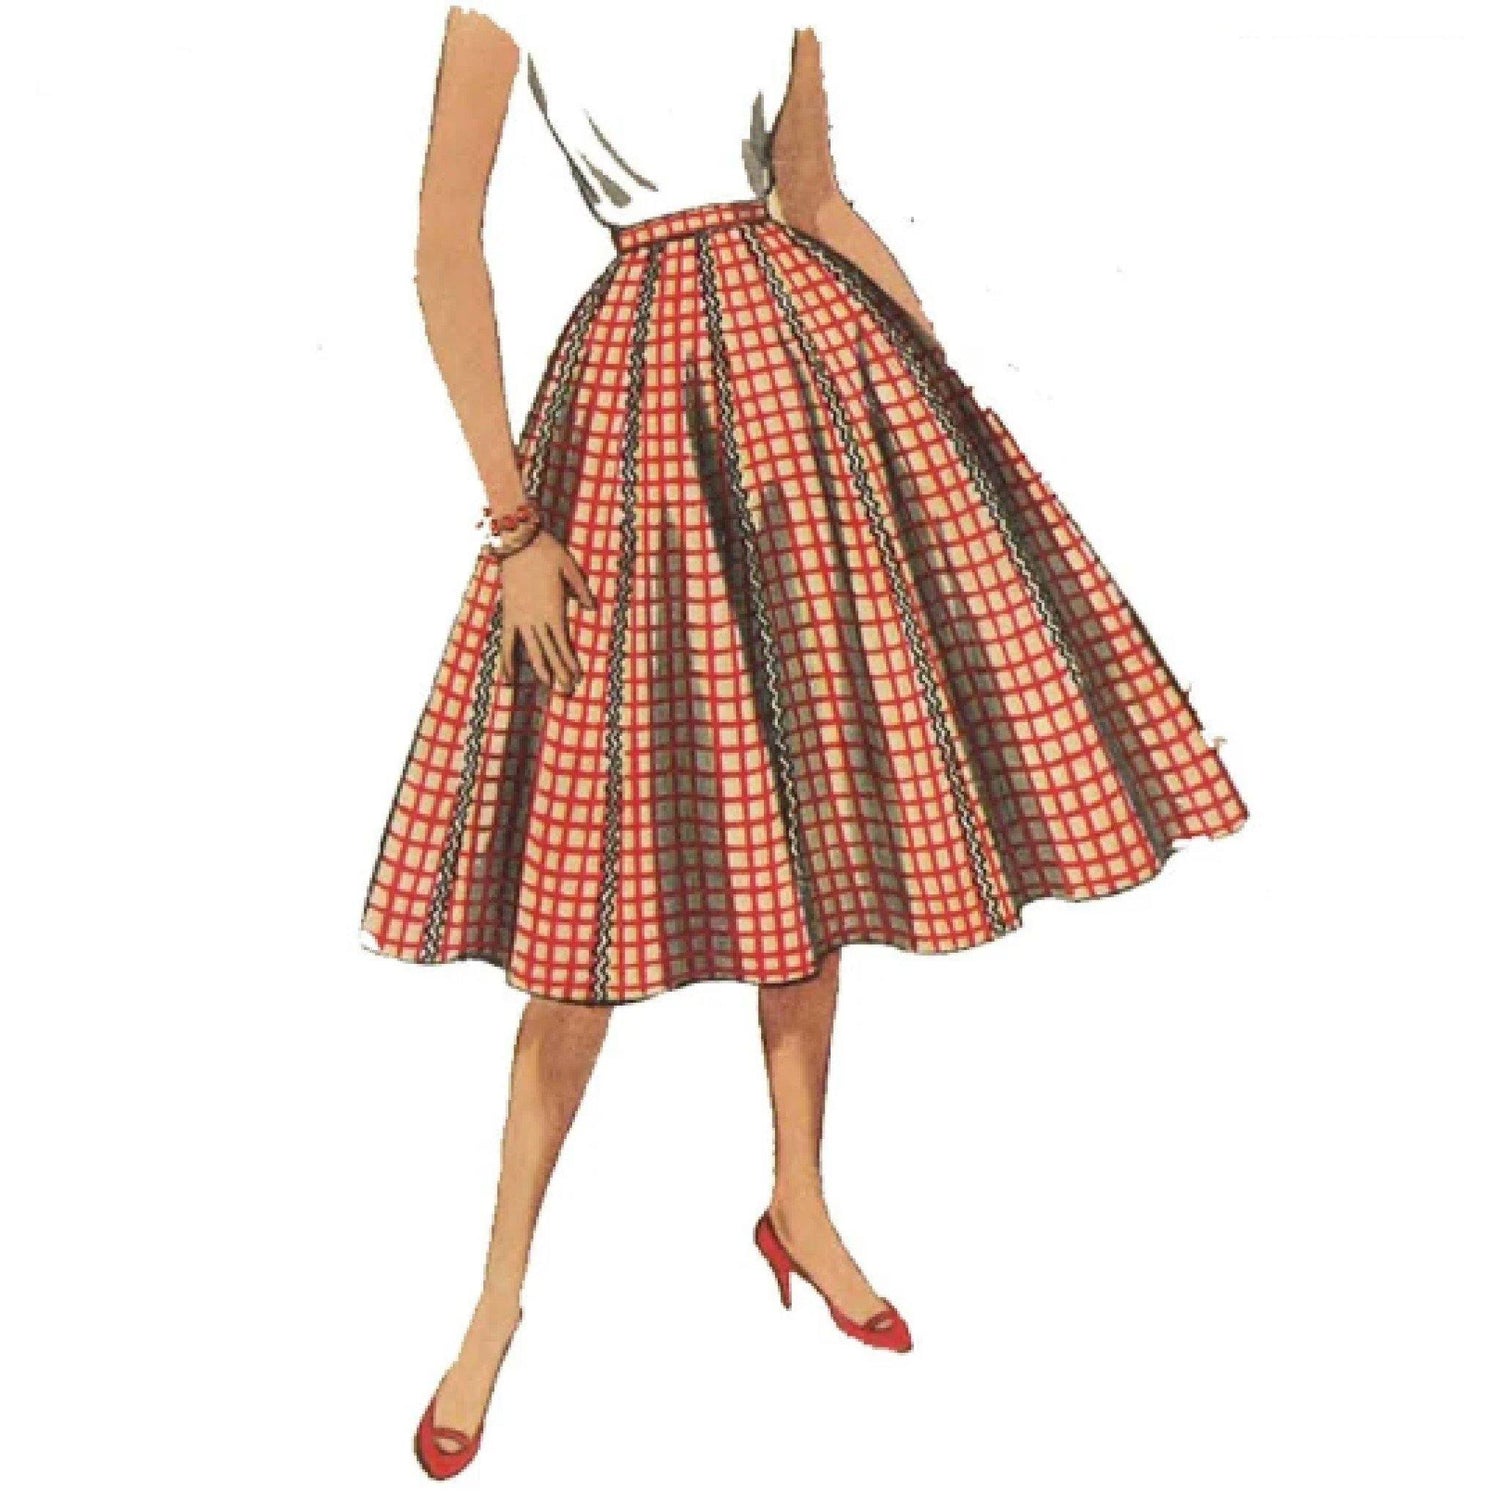 Buy 1950s Skirt Online In India India